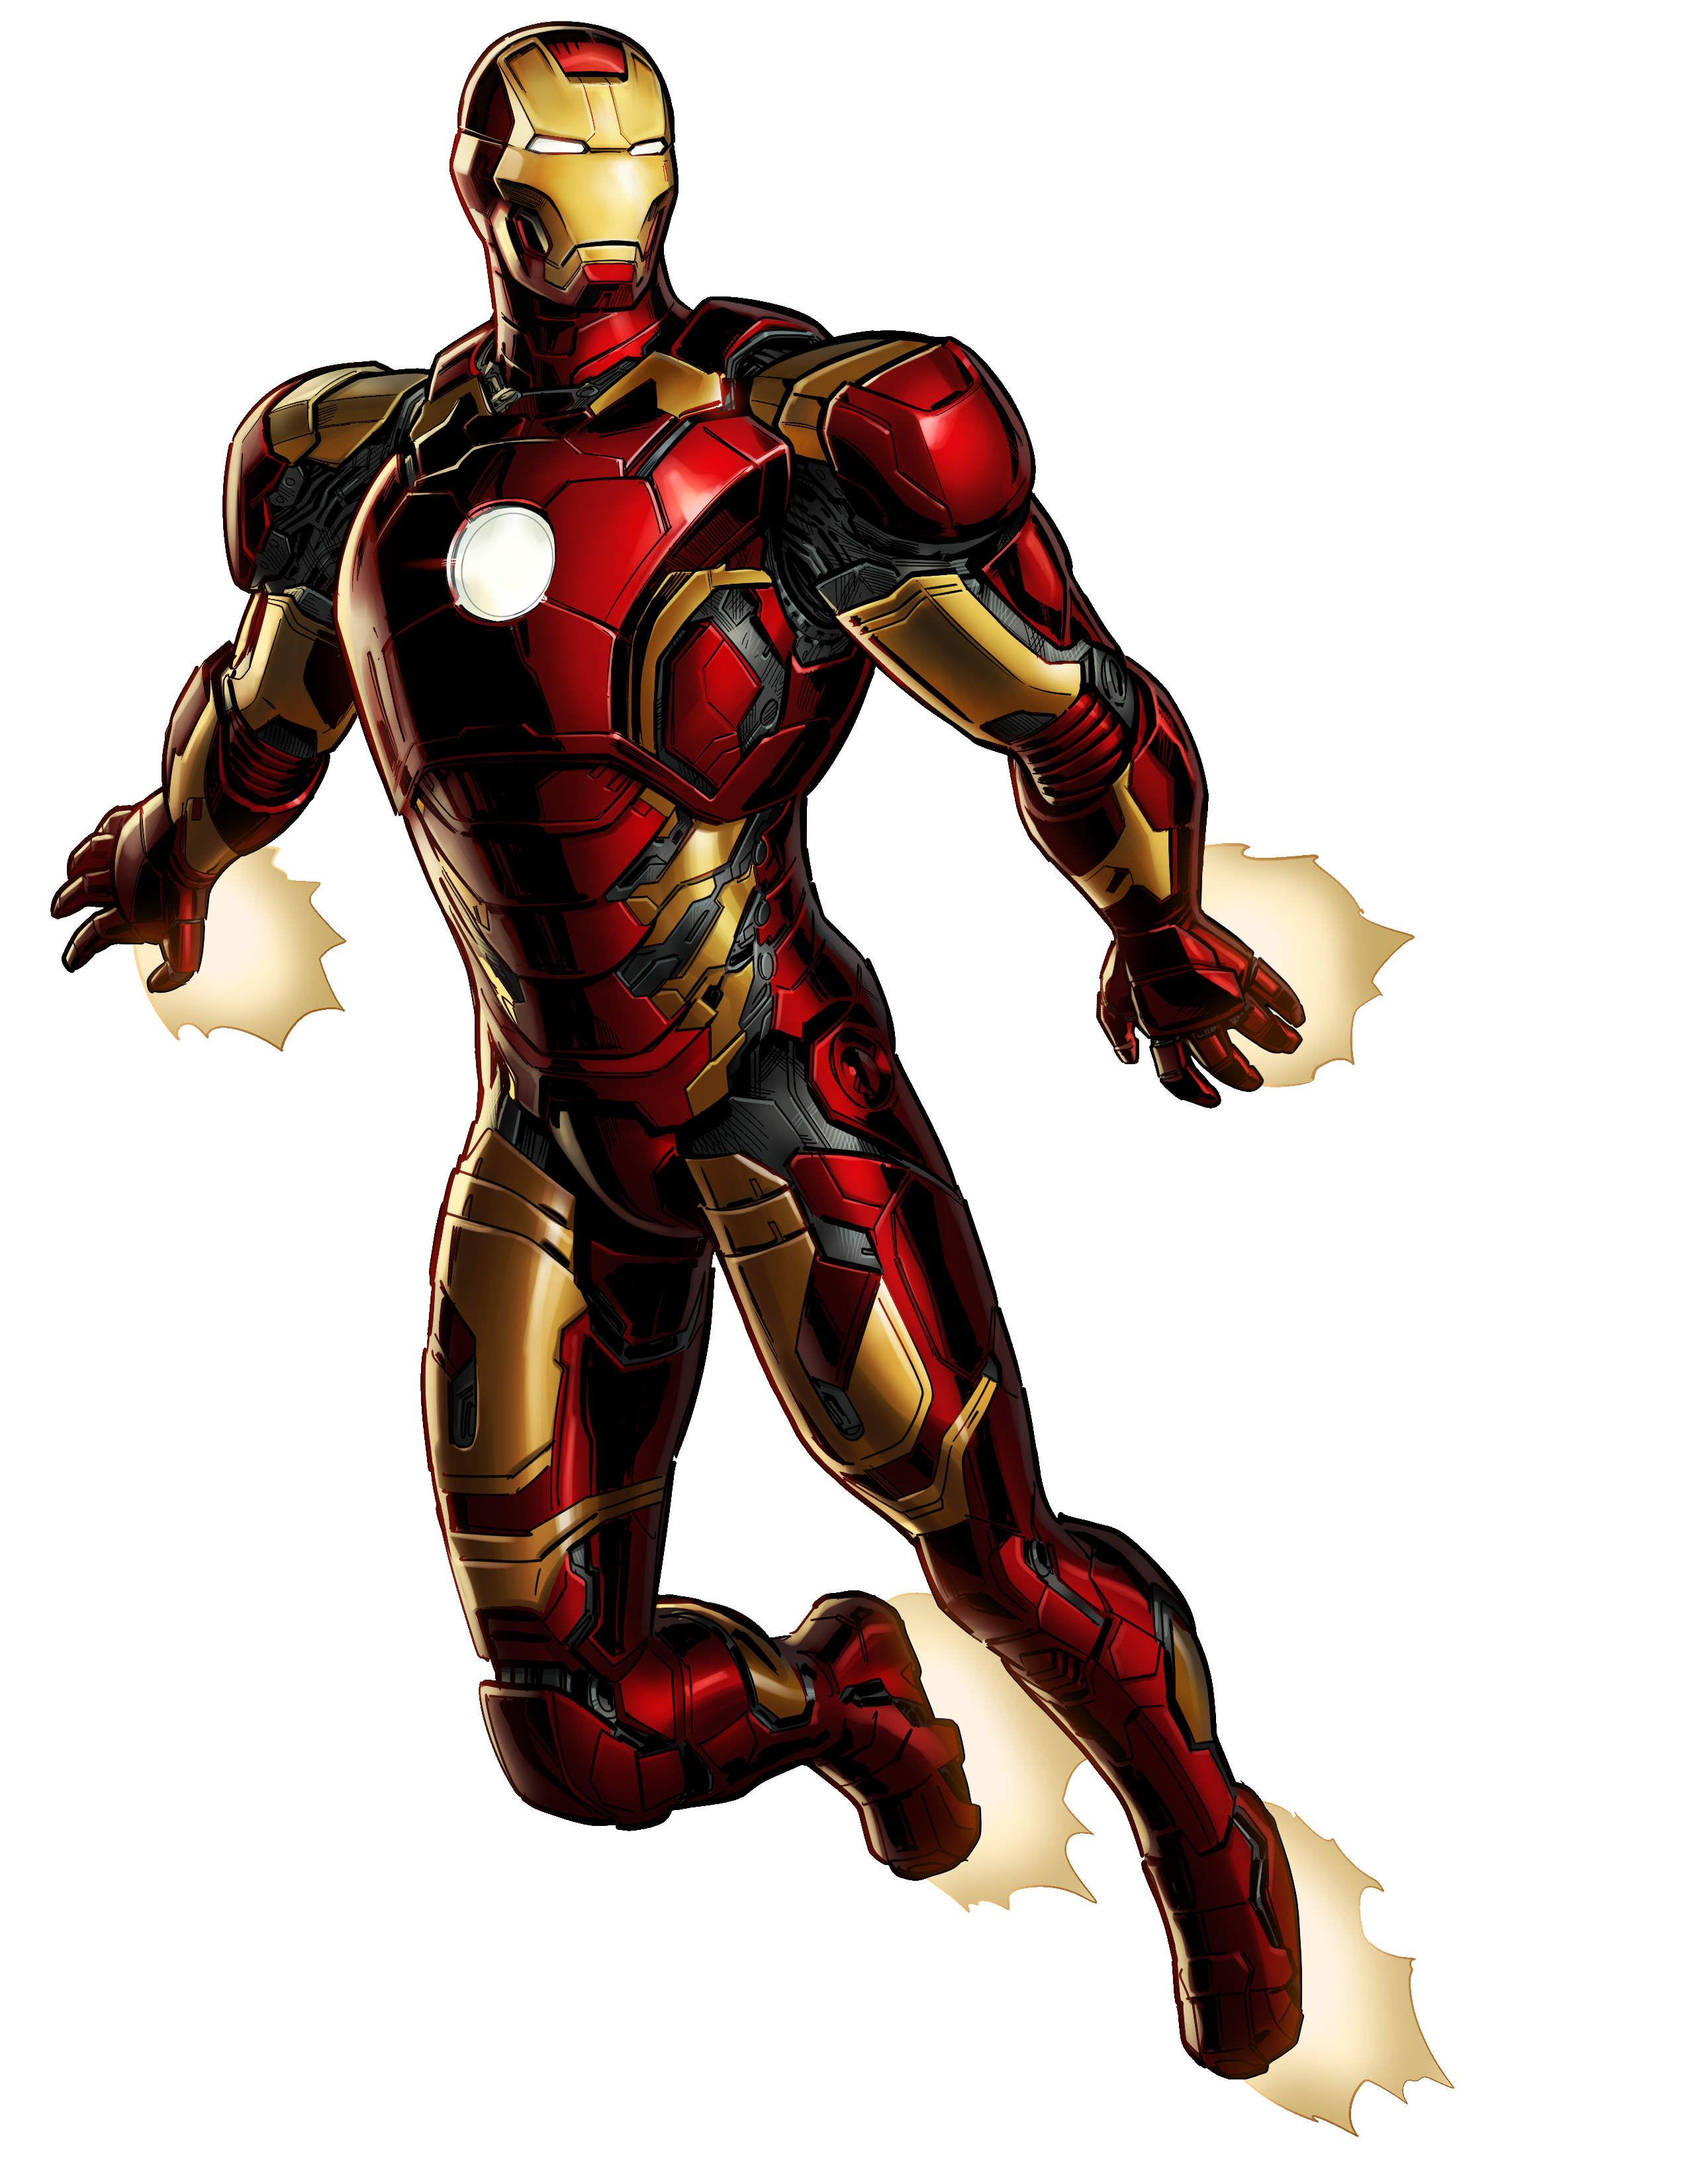 Iron Man PNG Image in Transparent pngteam.com